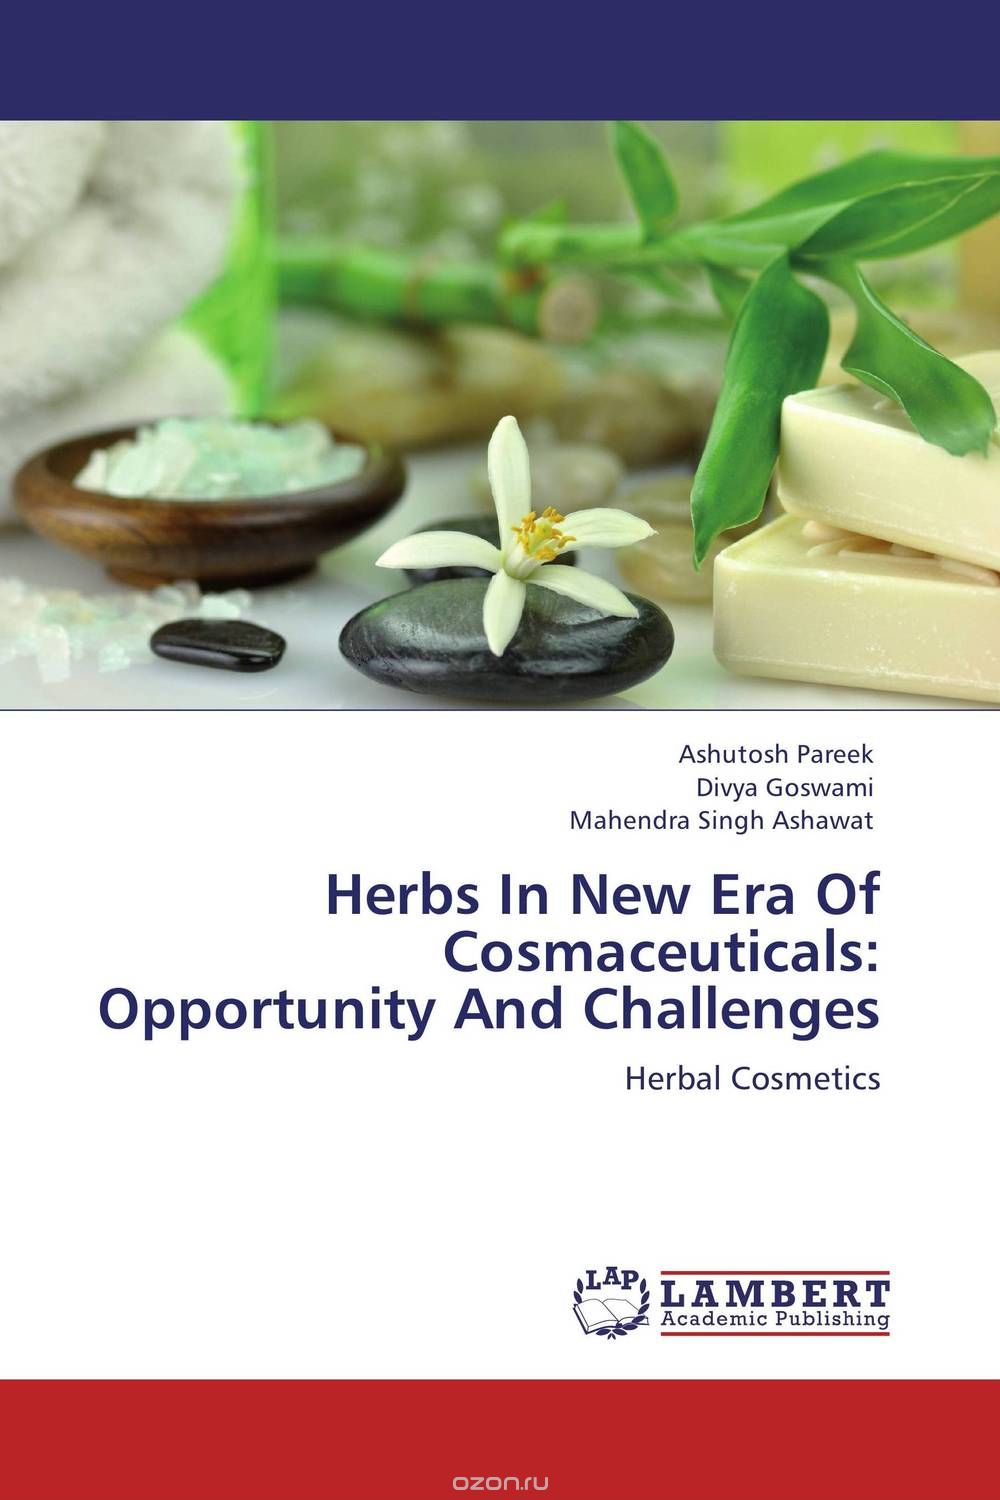 Скачать книгу "Herbs In New Era Of Cosmaceuticals: Opportunity And Challenges"